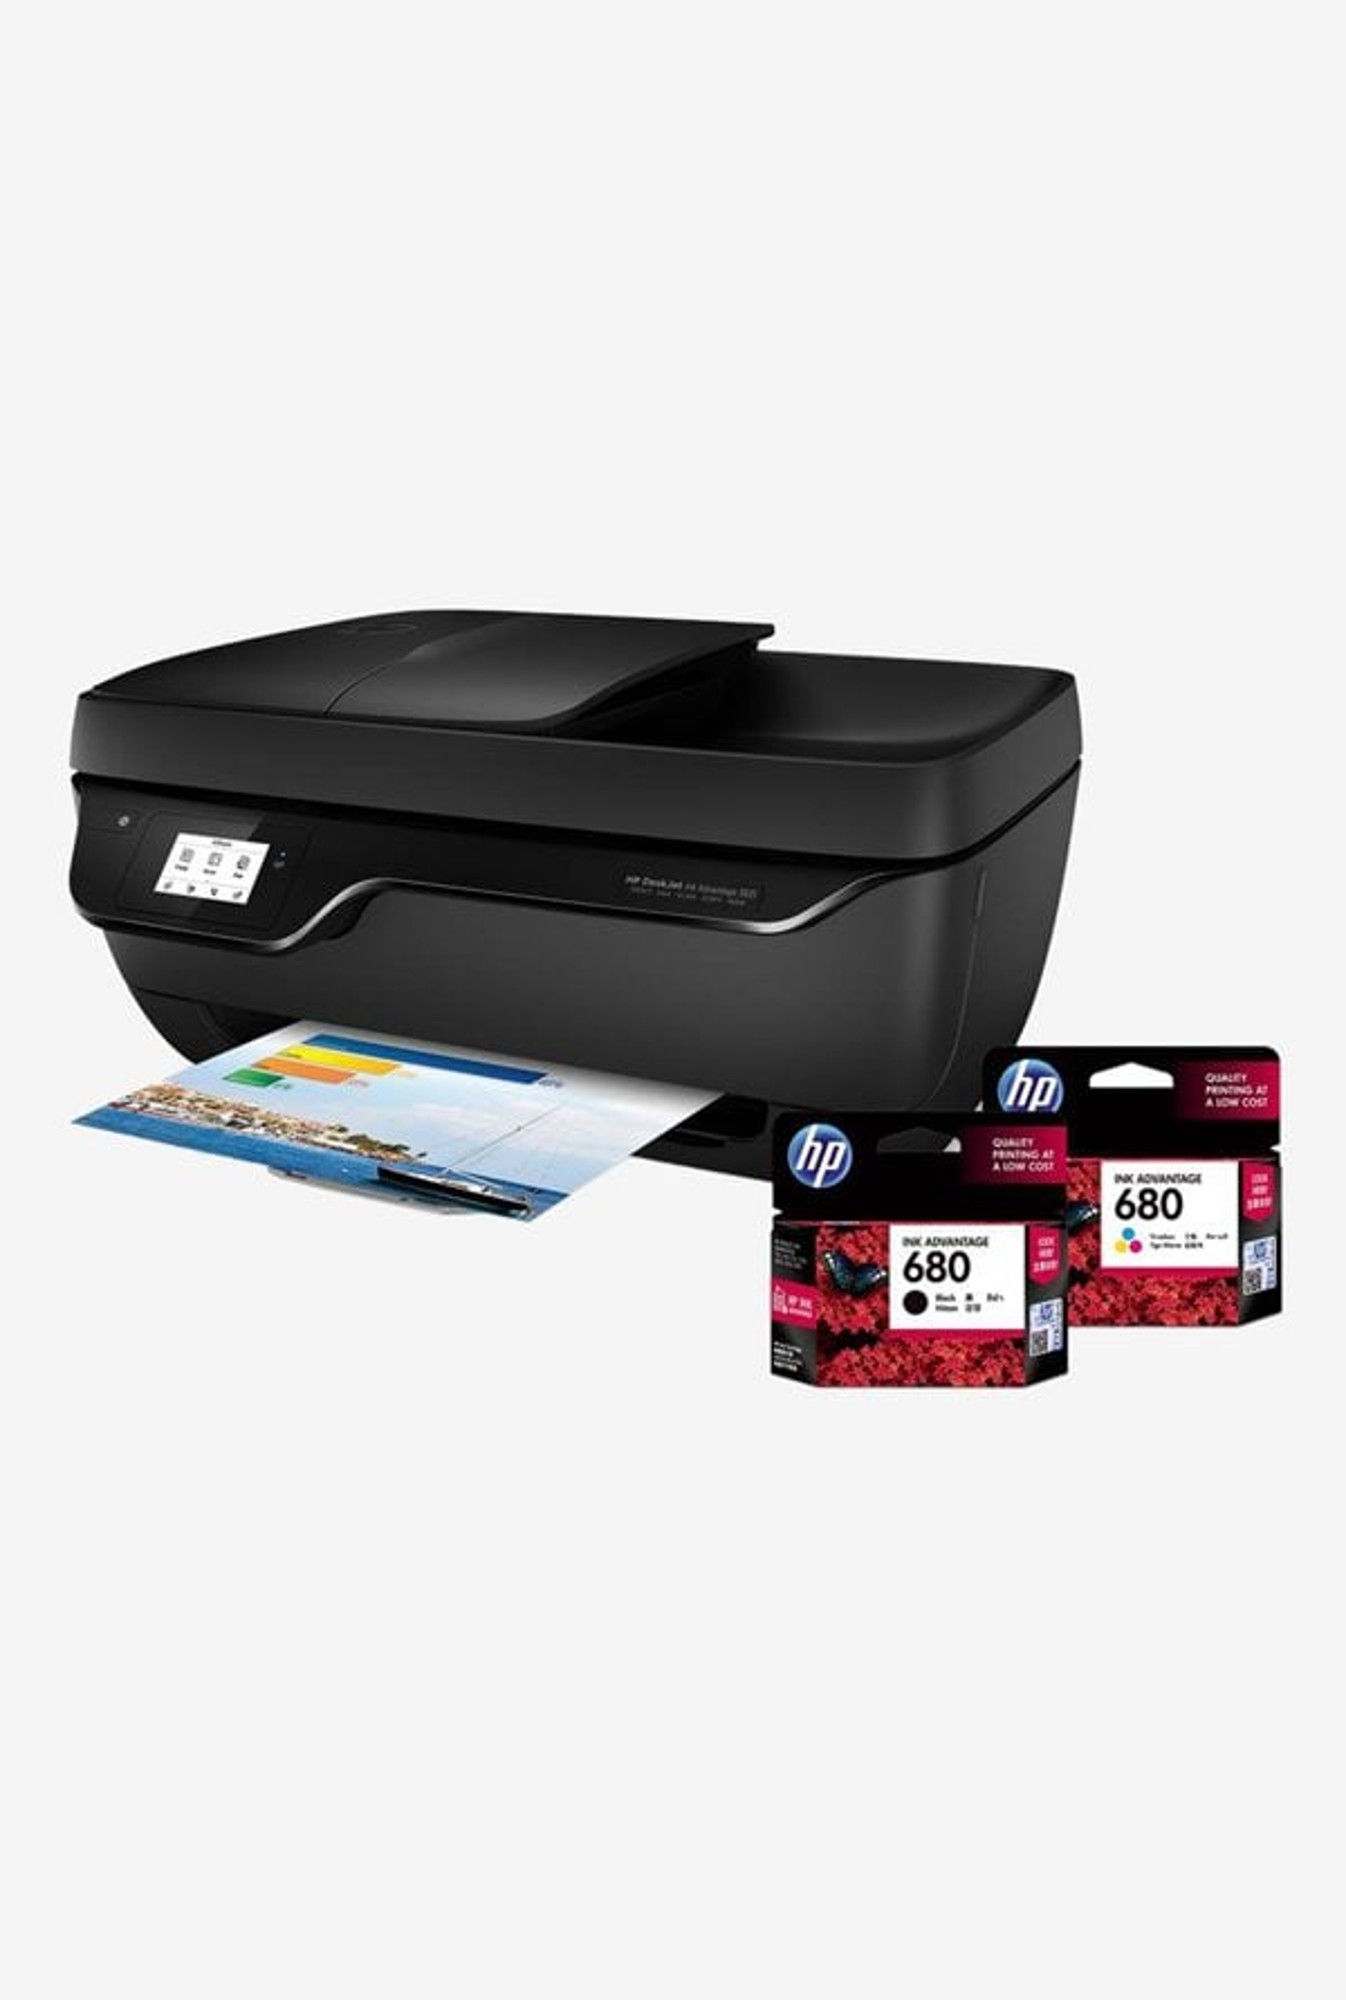 Hp Deskjet Ink Advantage 3835 F5r96b Multi Function Wireless Aio Printer Black From Hp At Best Prices On Tata Cliq